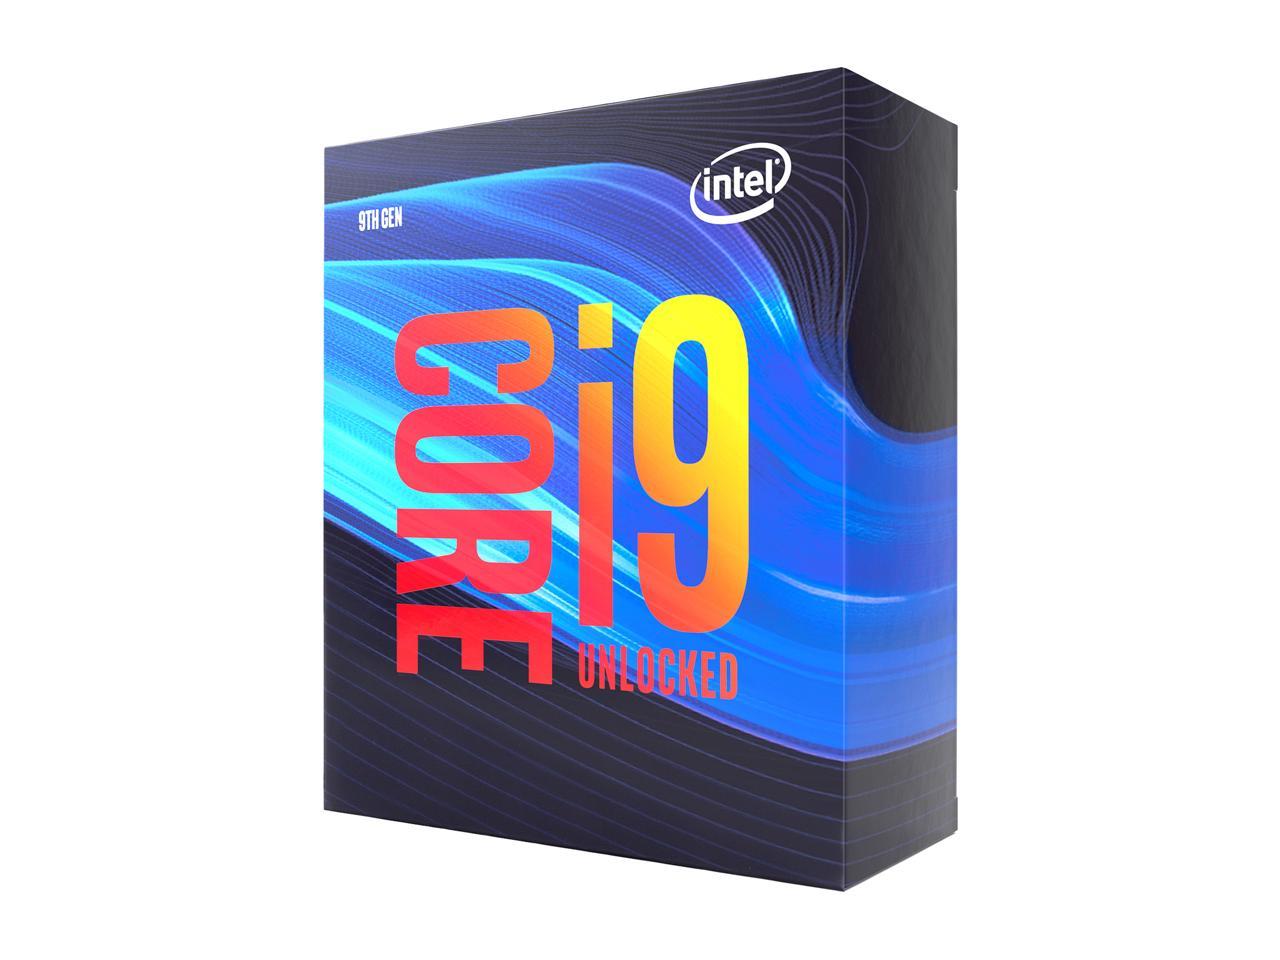 Intel Core i9-9900K Coffee Lake 8-Core 3.6GHz CPU Processor 